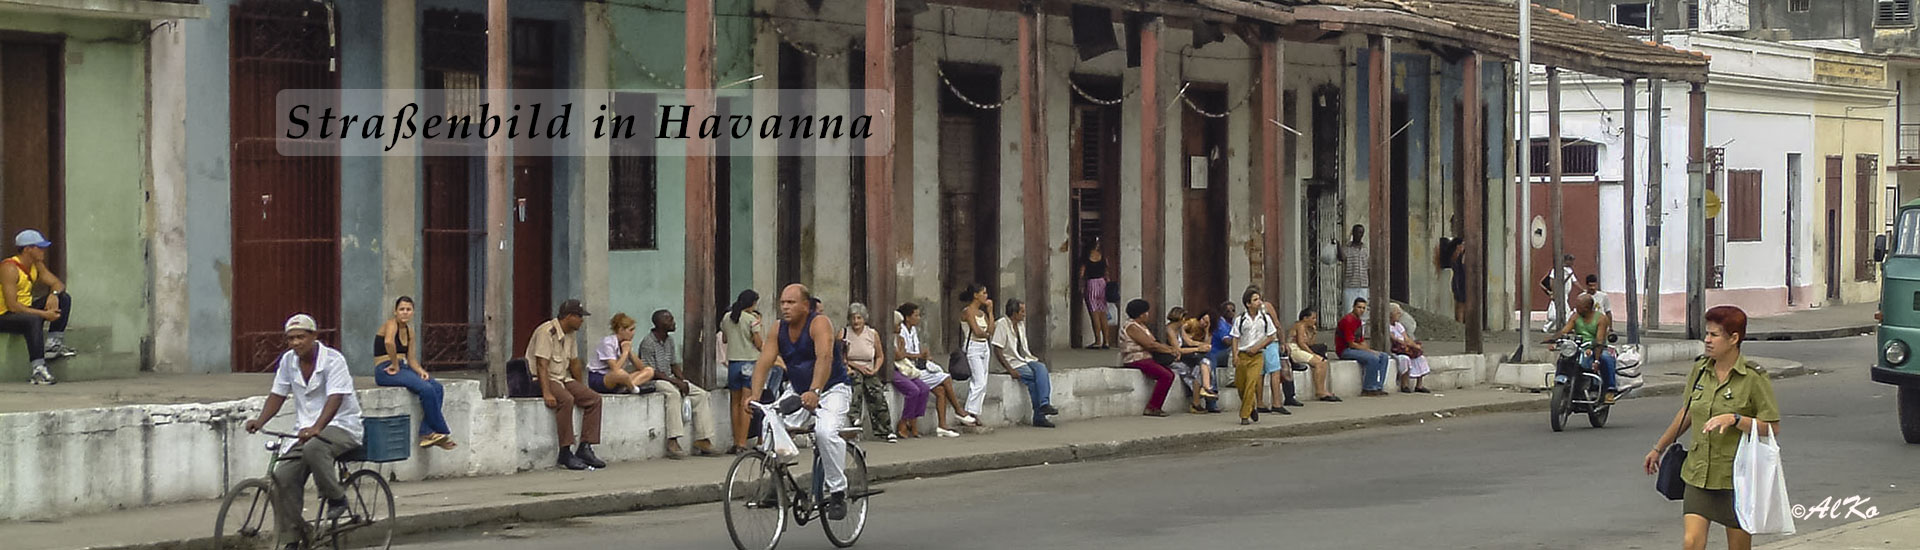 Strassenbild-in-Havanna.jpg